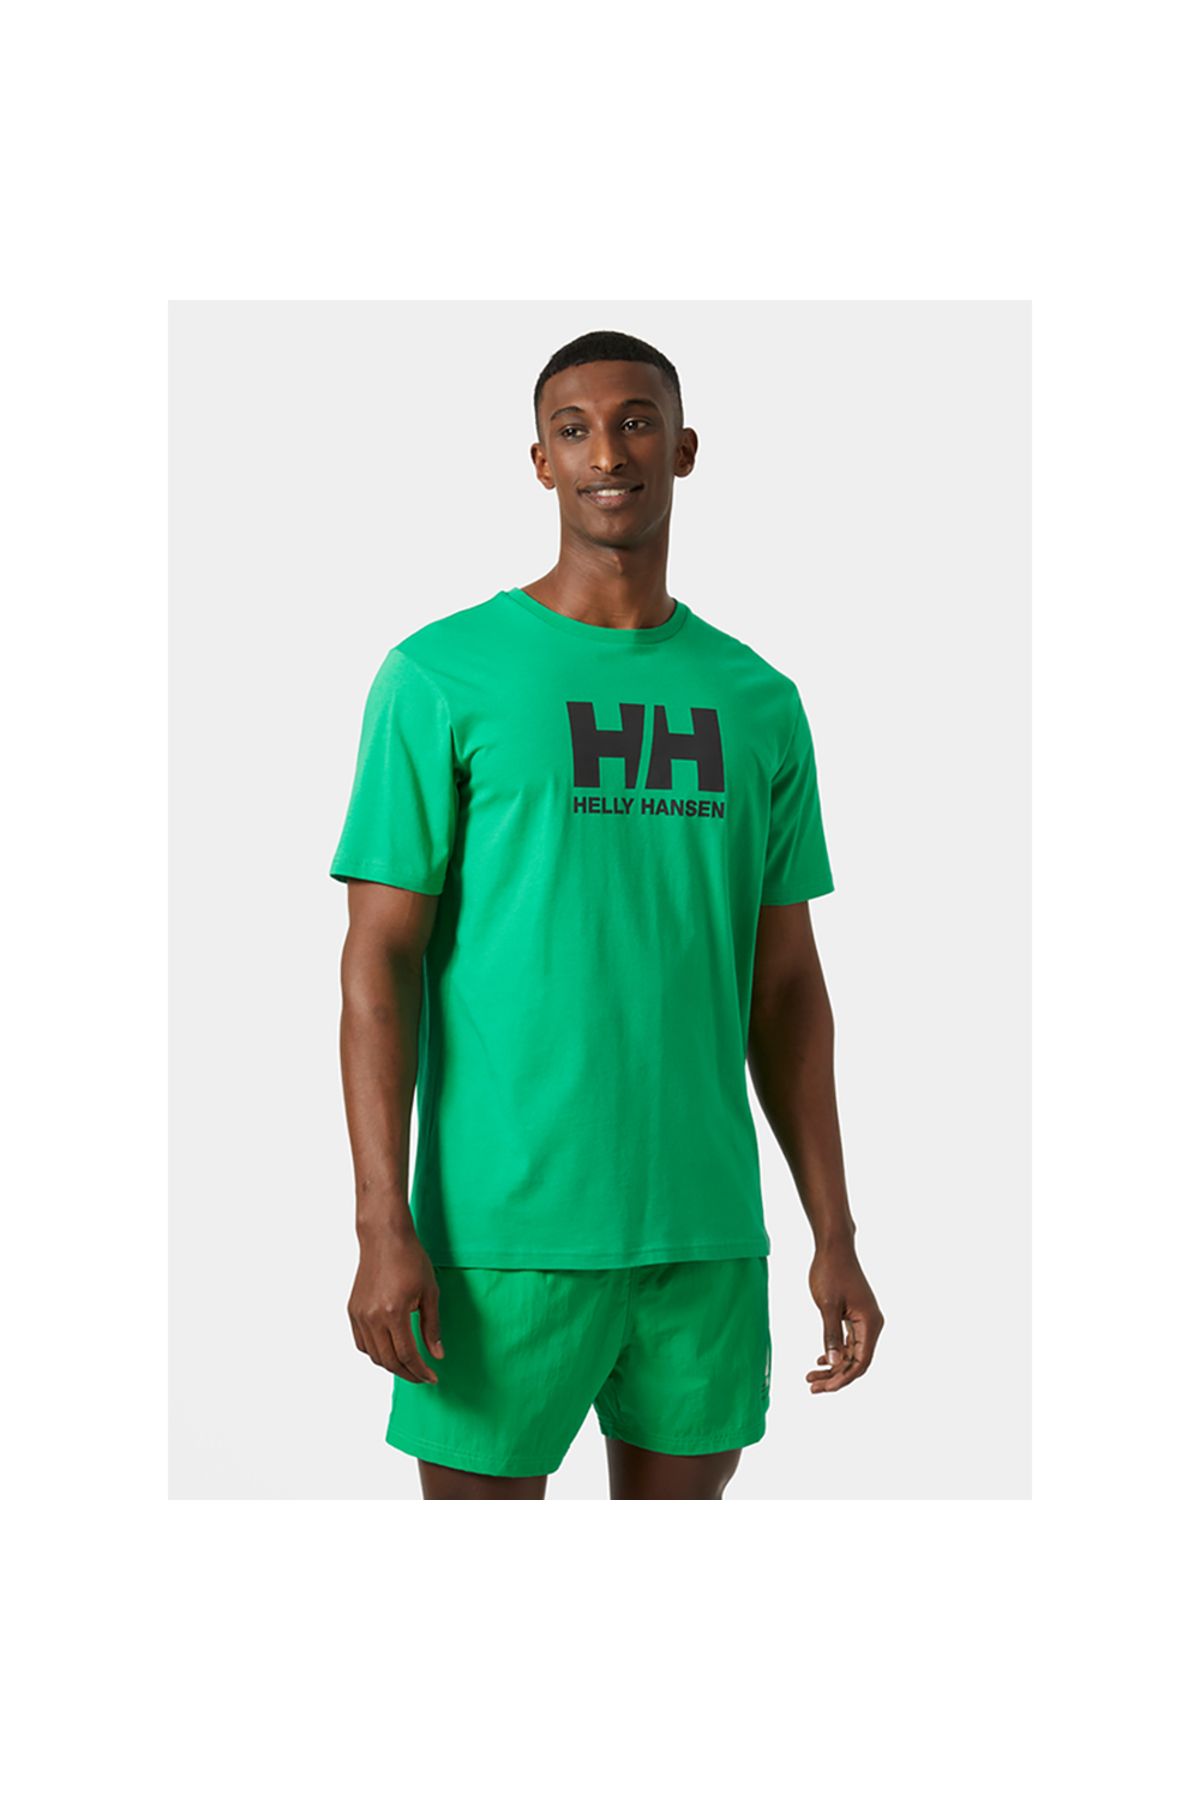 Helly Hansen Logo Erkek Kısa Kollu T-Shirt